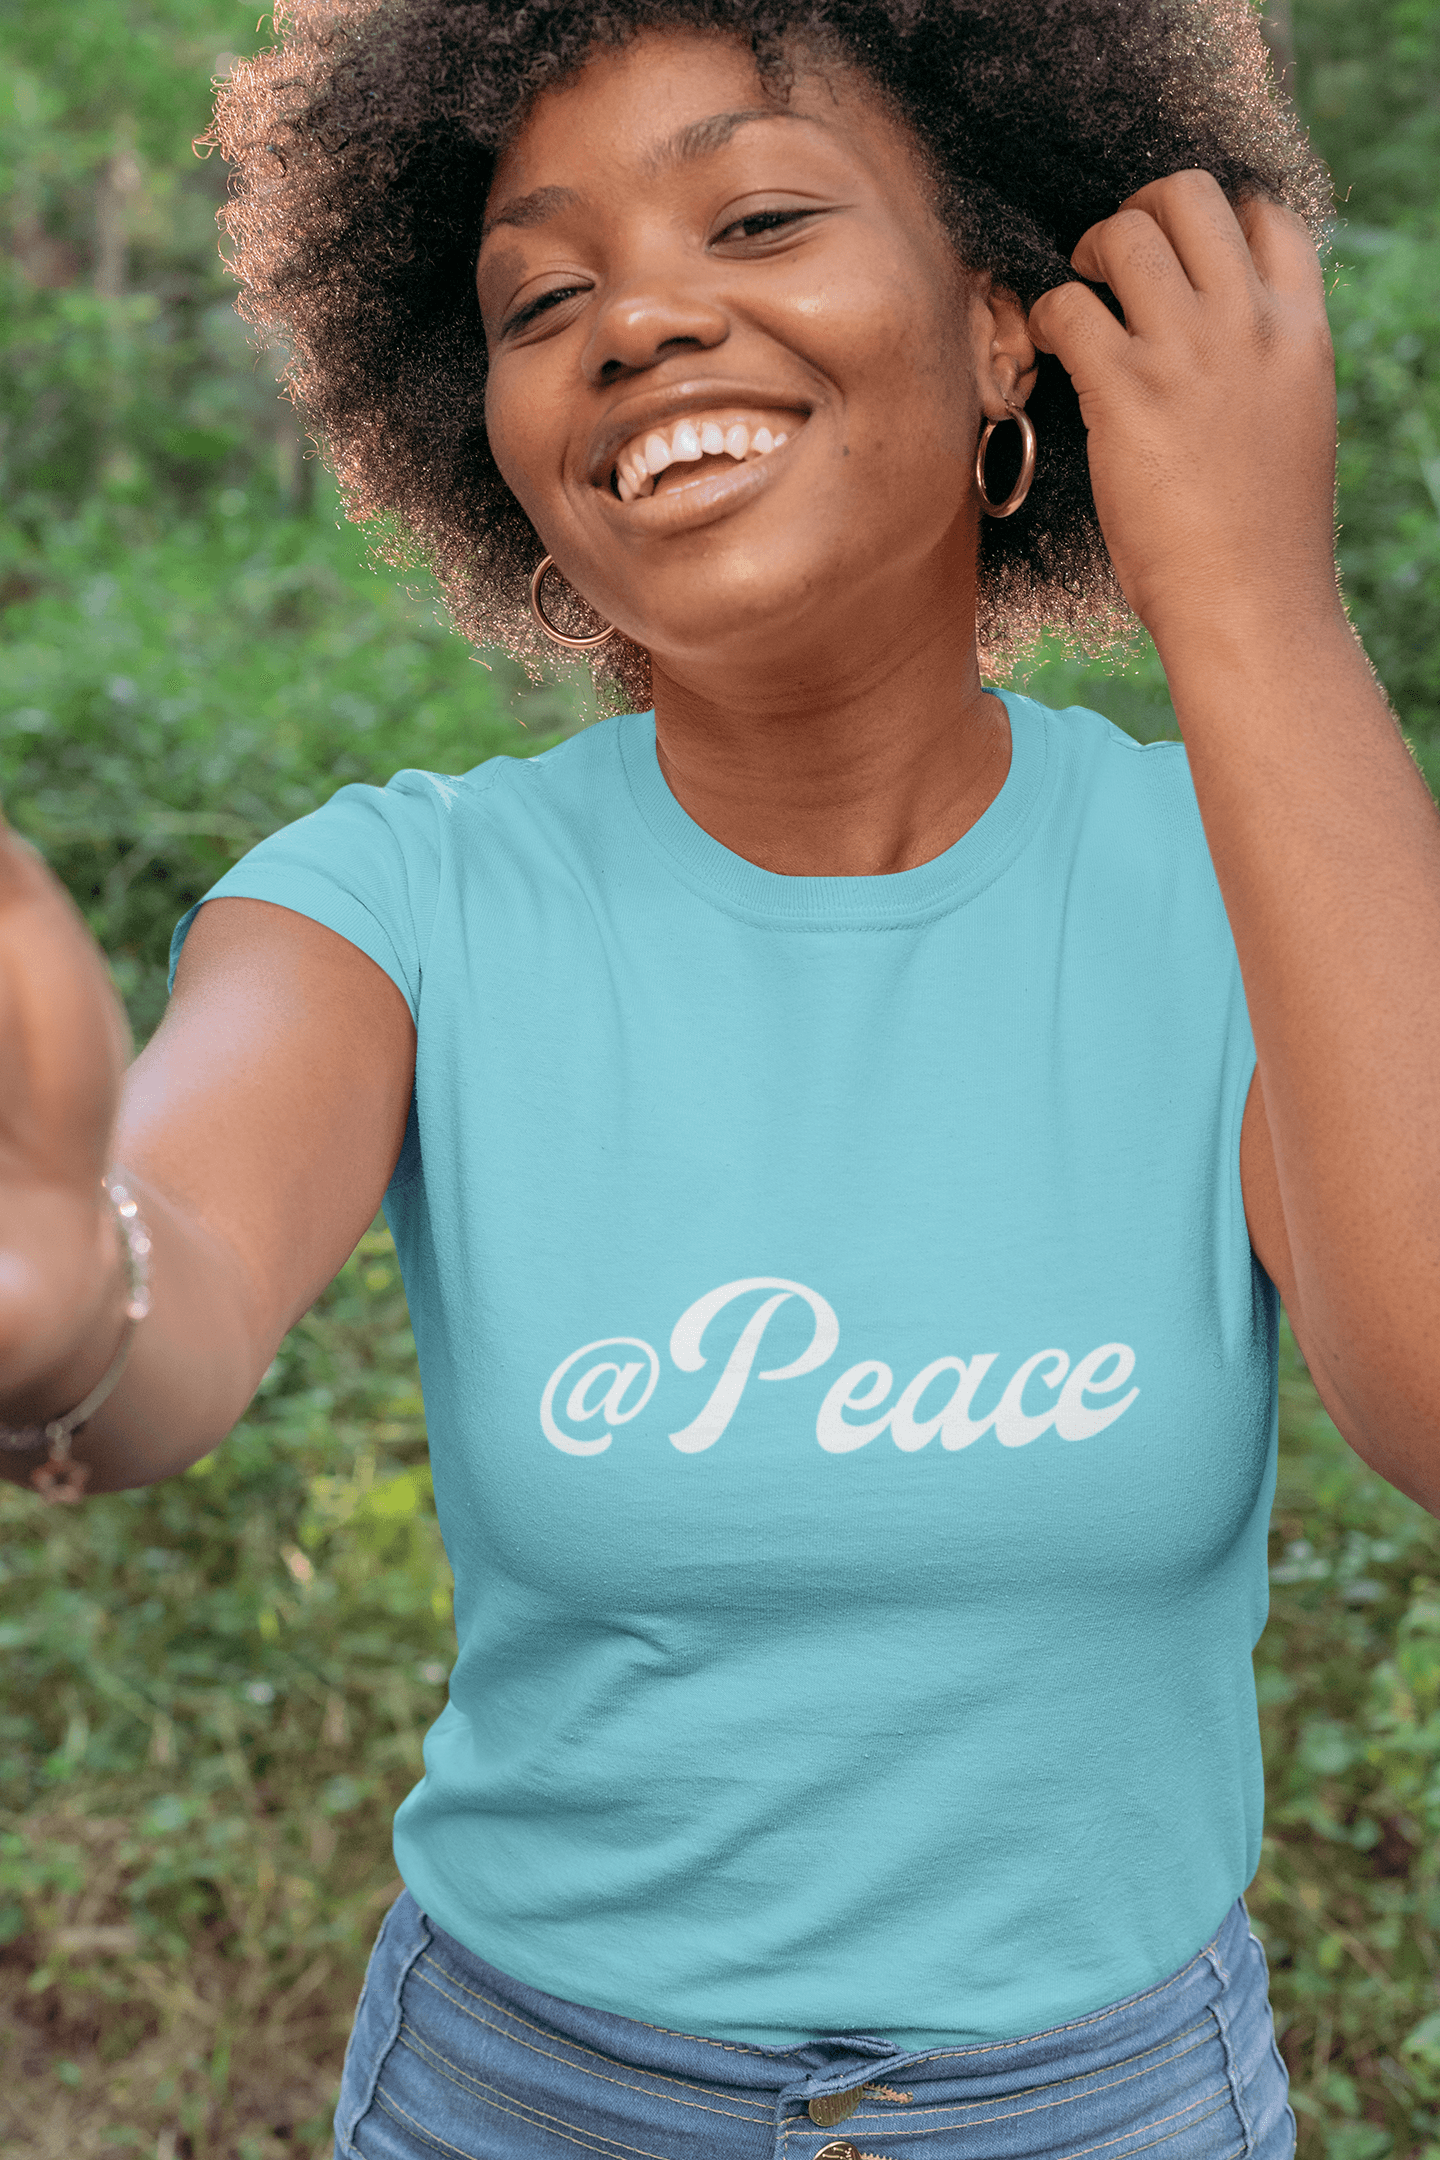 @ Peace T-shirt - Women Empowerment T-Shirts & Apparel | CP Designs Unlimited